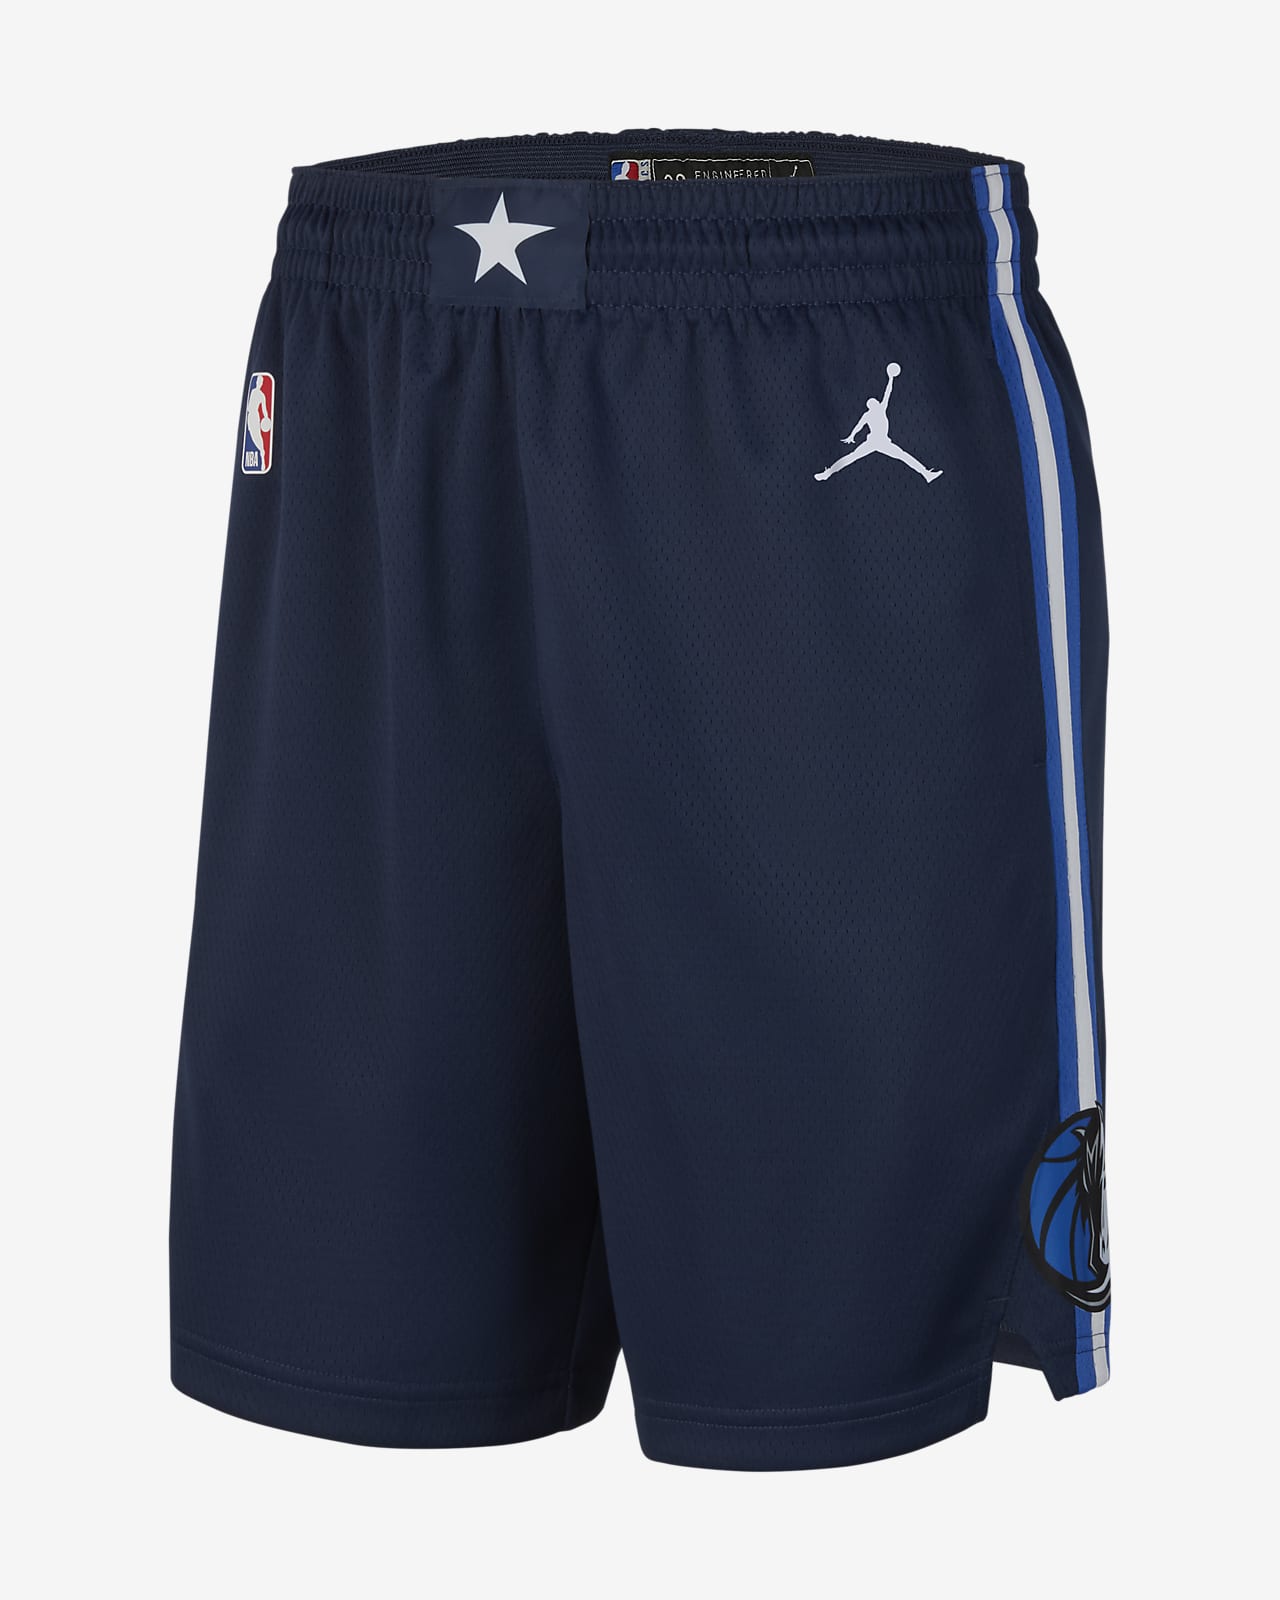 Mavericks Statement Edition 2020 Men's Jordan NBA Swingman Shorts